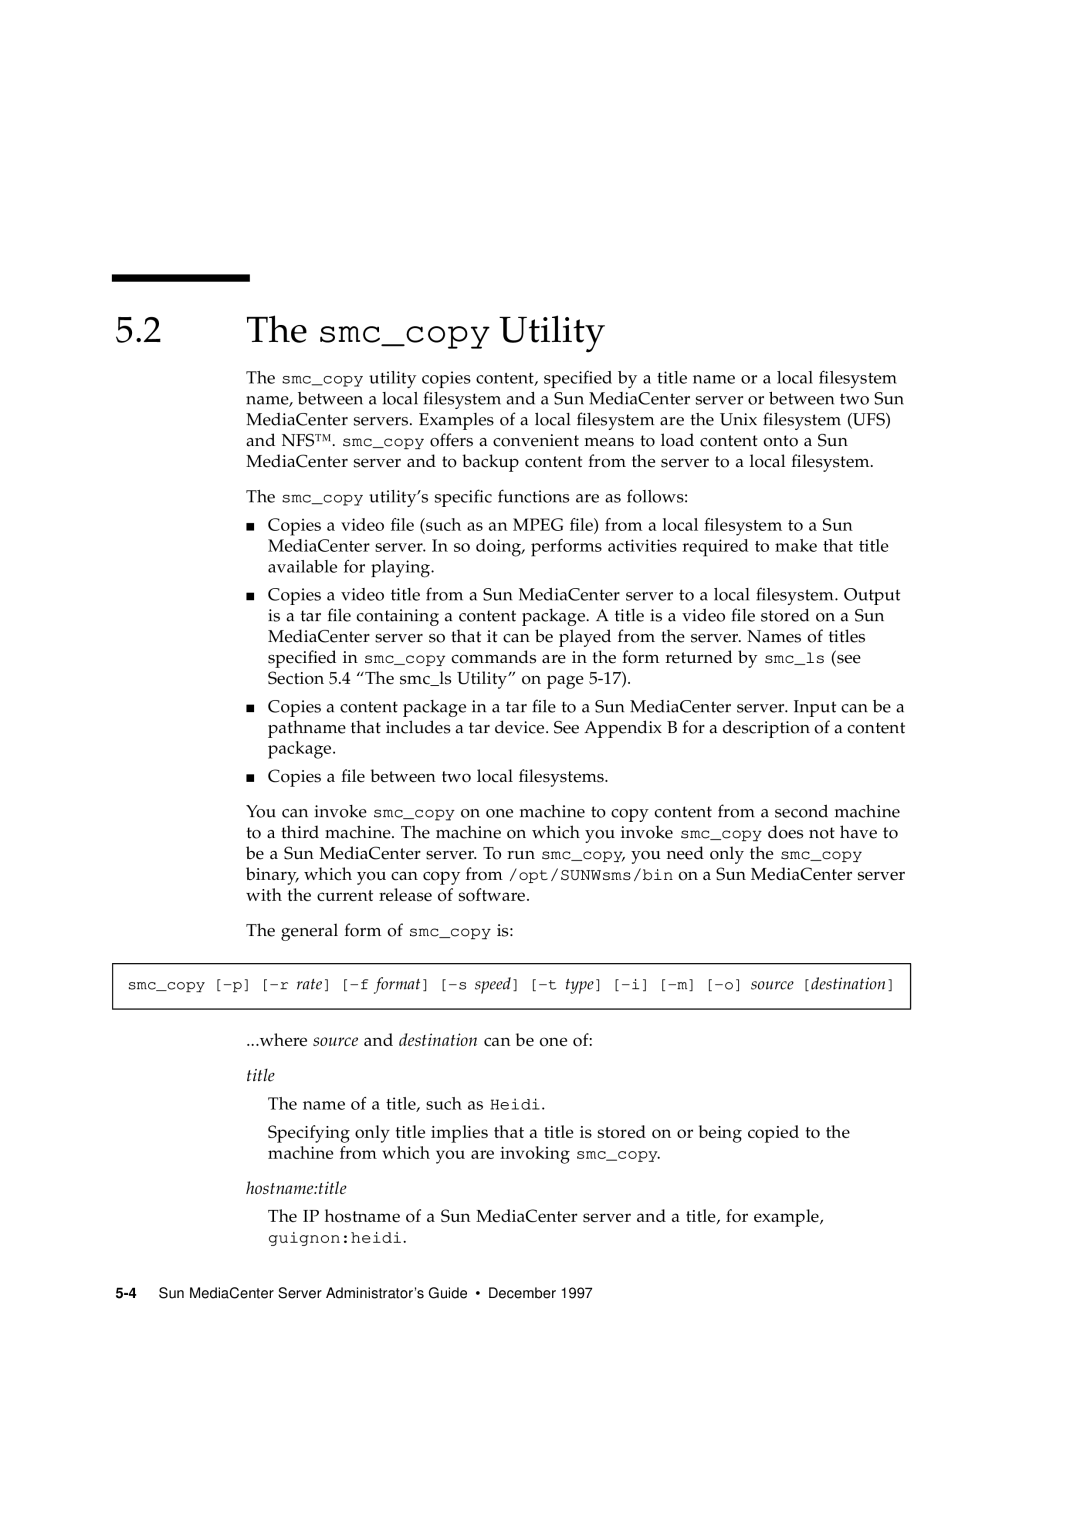 Sun Microsystems 2.1 manual The smccopy Utility, hostnametitle 